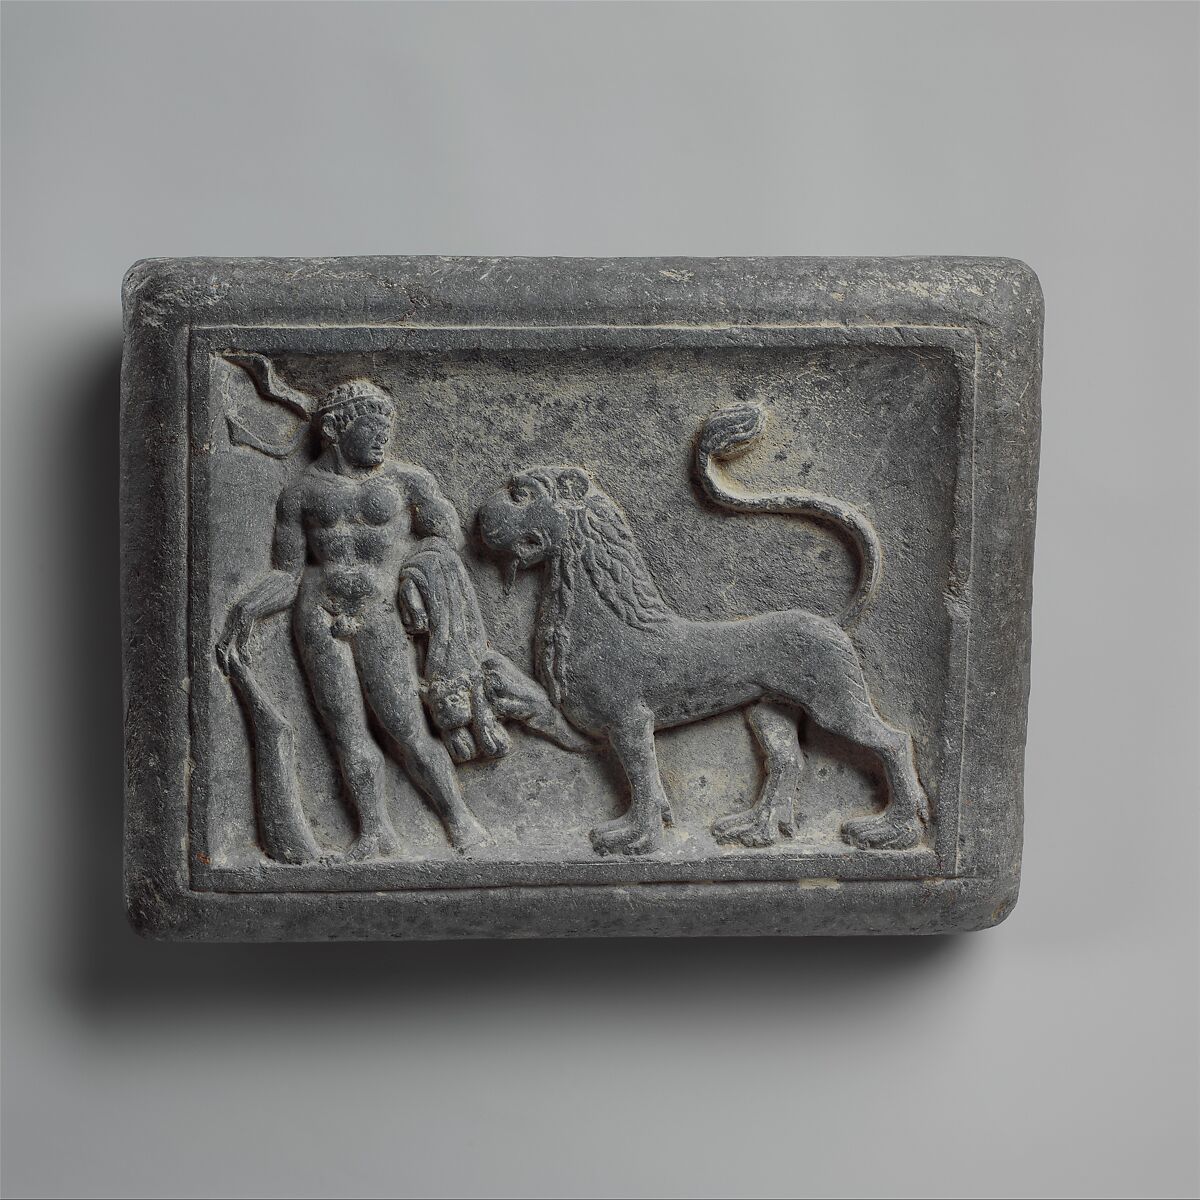 Wrestler's Weight with Hercules and the Nemean Lion; Wrestling Scene (reverse), Schist, Pakistan (ancient region of Gandhara) 